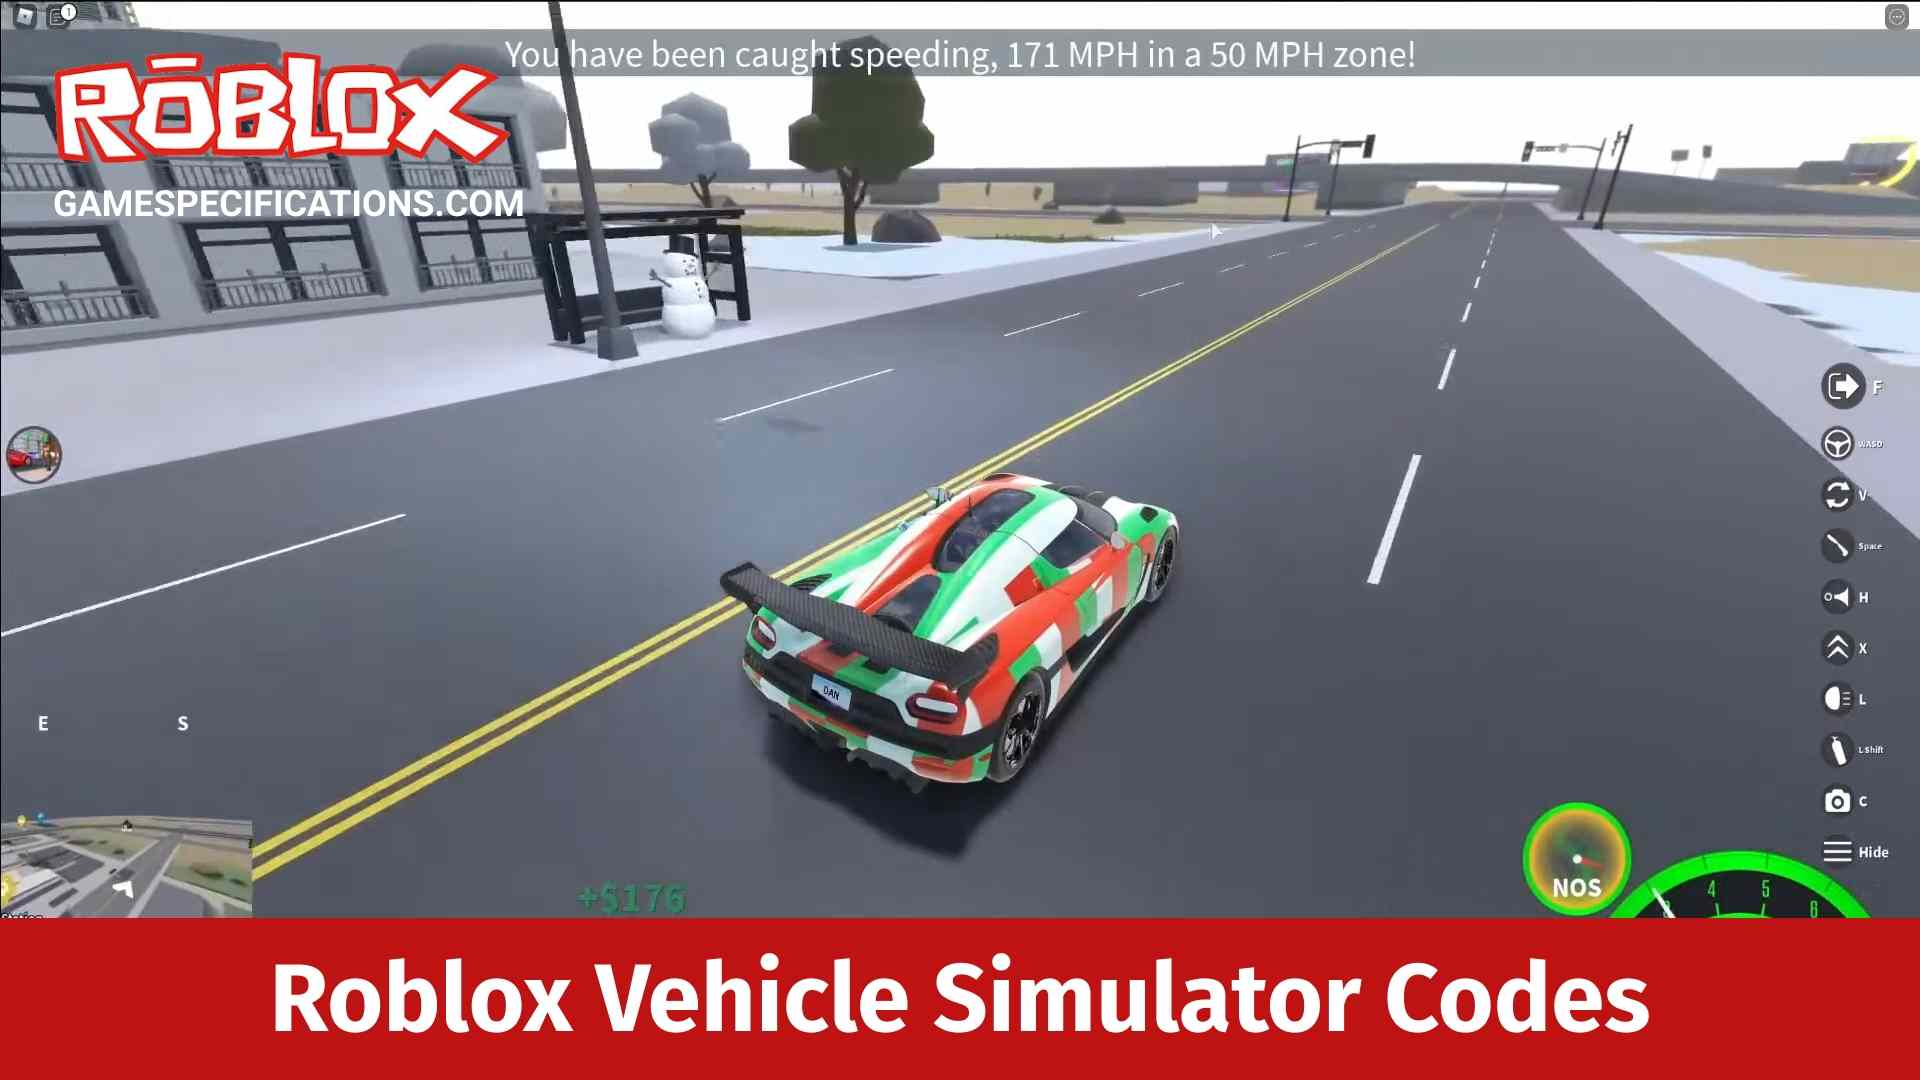 Roblox Vehicle Simulator Codes July 2021 Game Specifications - roblox vehicle sim codes 2021